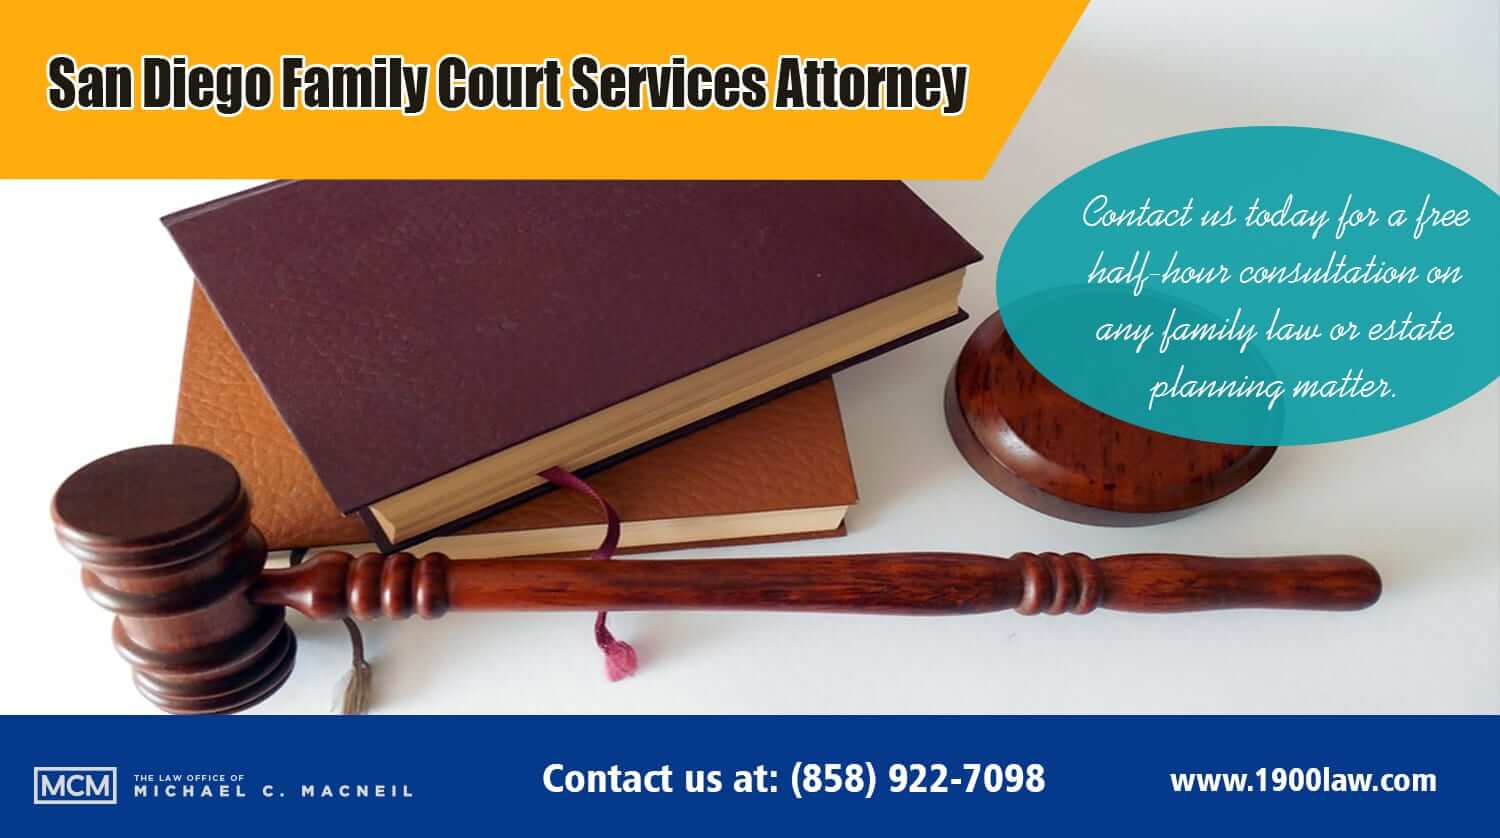 Child Custody - San Diego Family Court Services Attorney